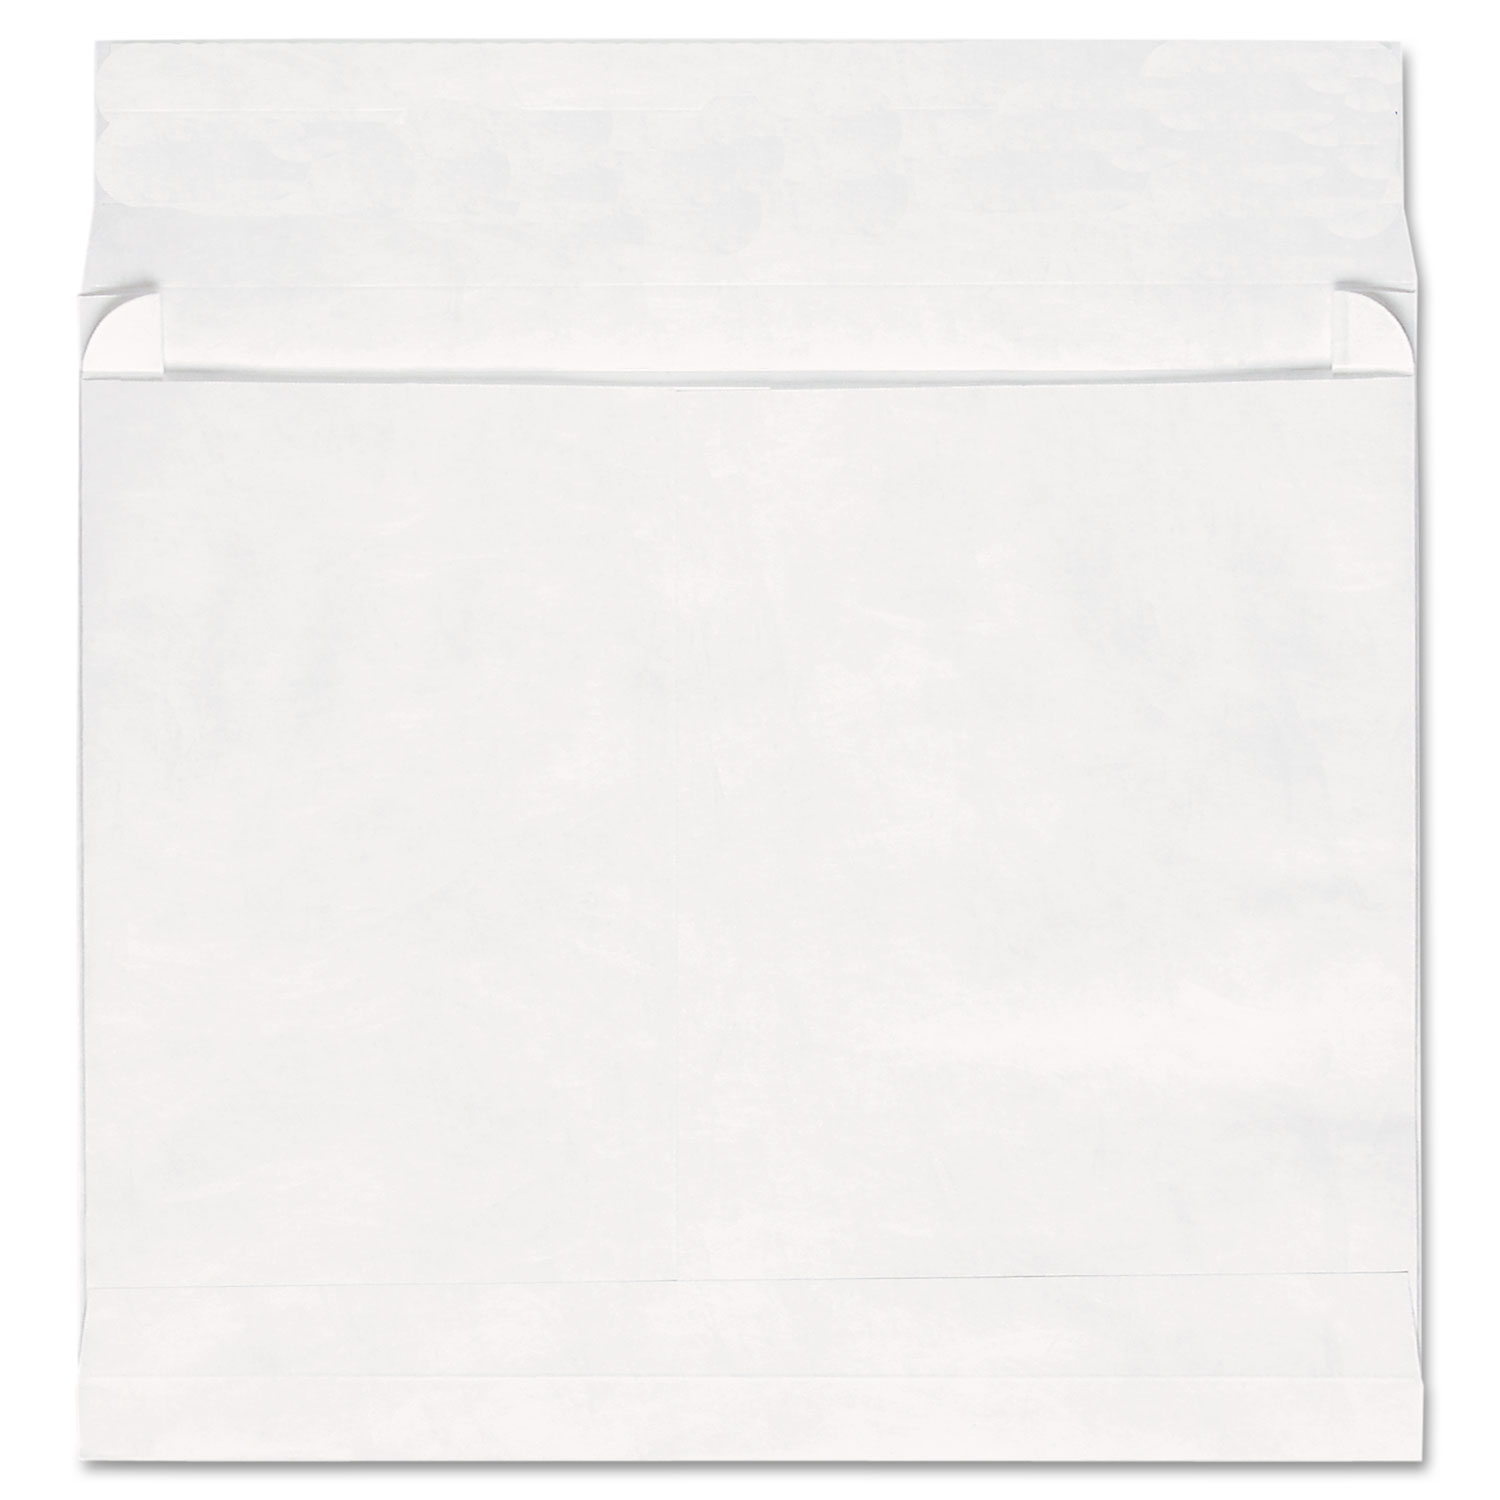  Universal UNV19002 Deluxe Tyvek Expansion Envelopes, #13 1/2, Square Flap, Self-Adhesive Closure, 10 x 13, White, 100/Box (UNV19002) 